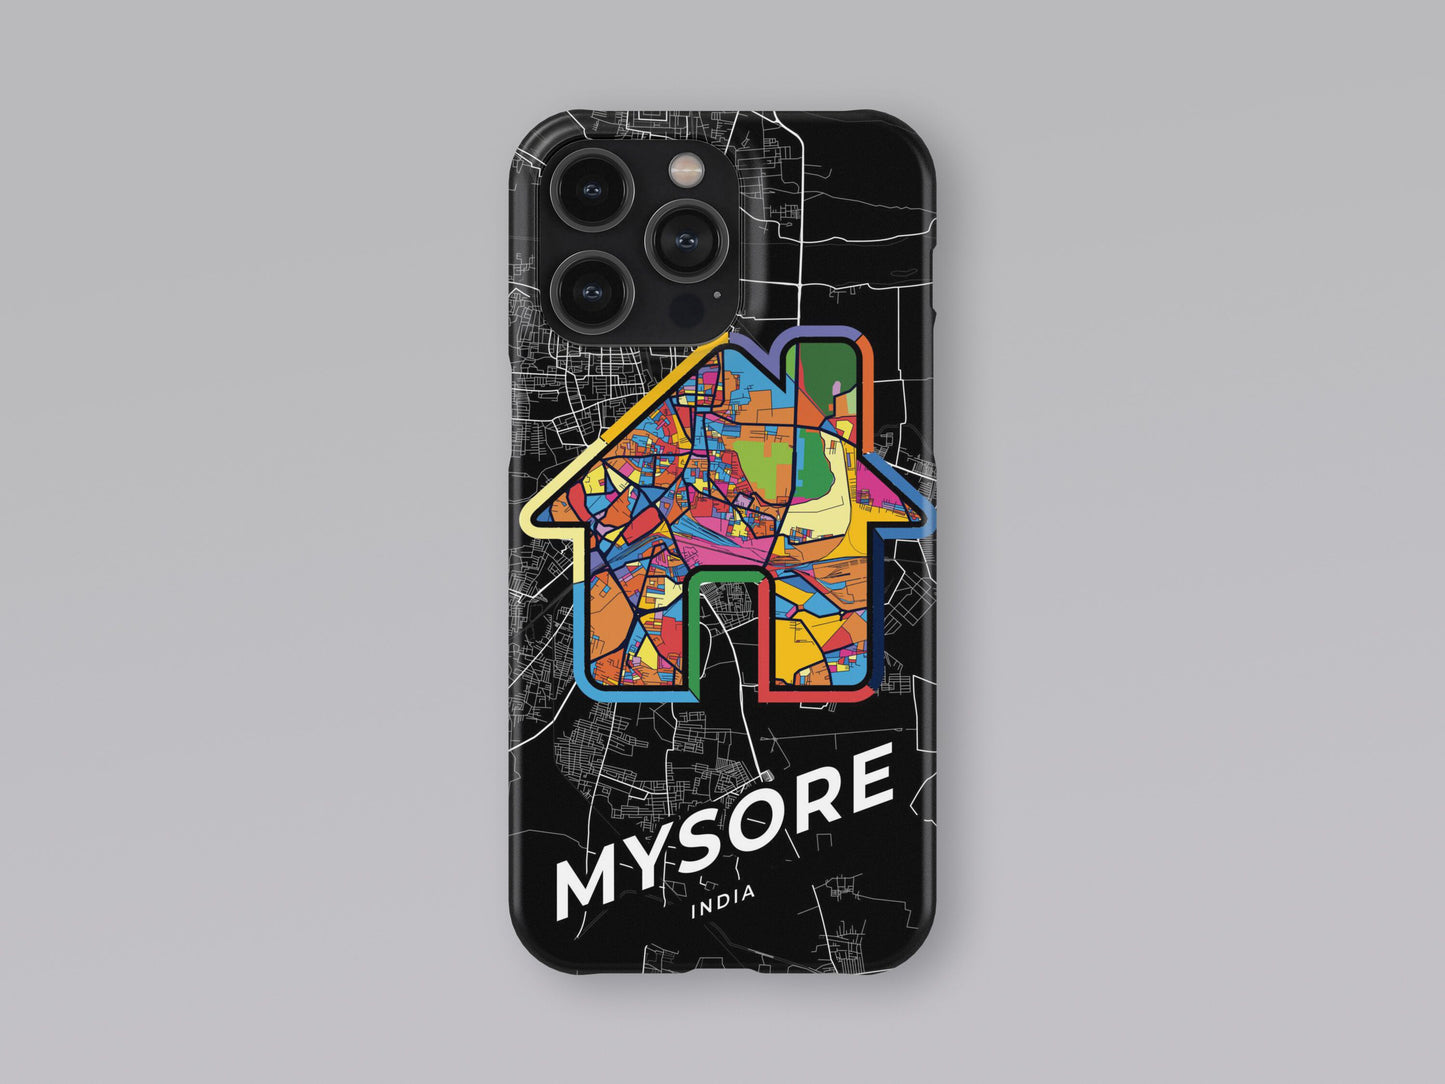 Mysore India slim phone case with colorful icon 3